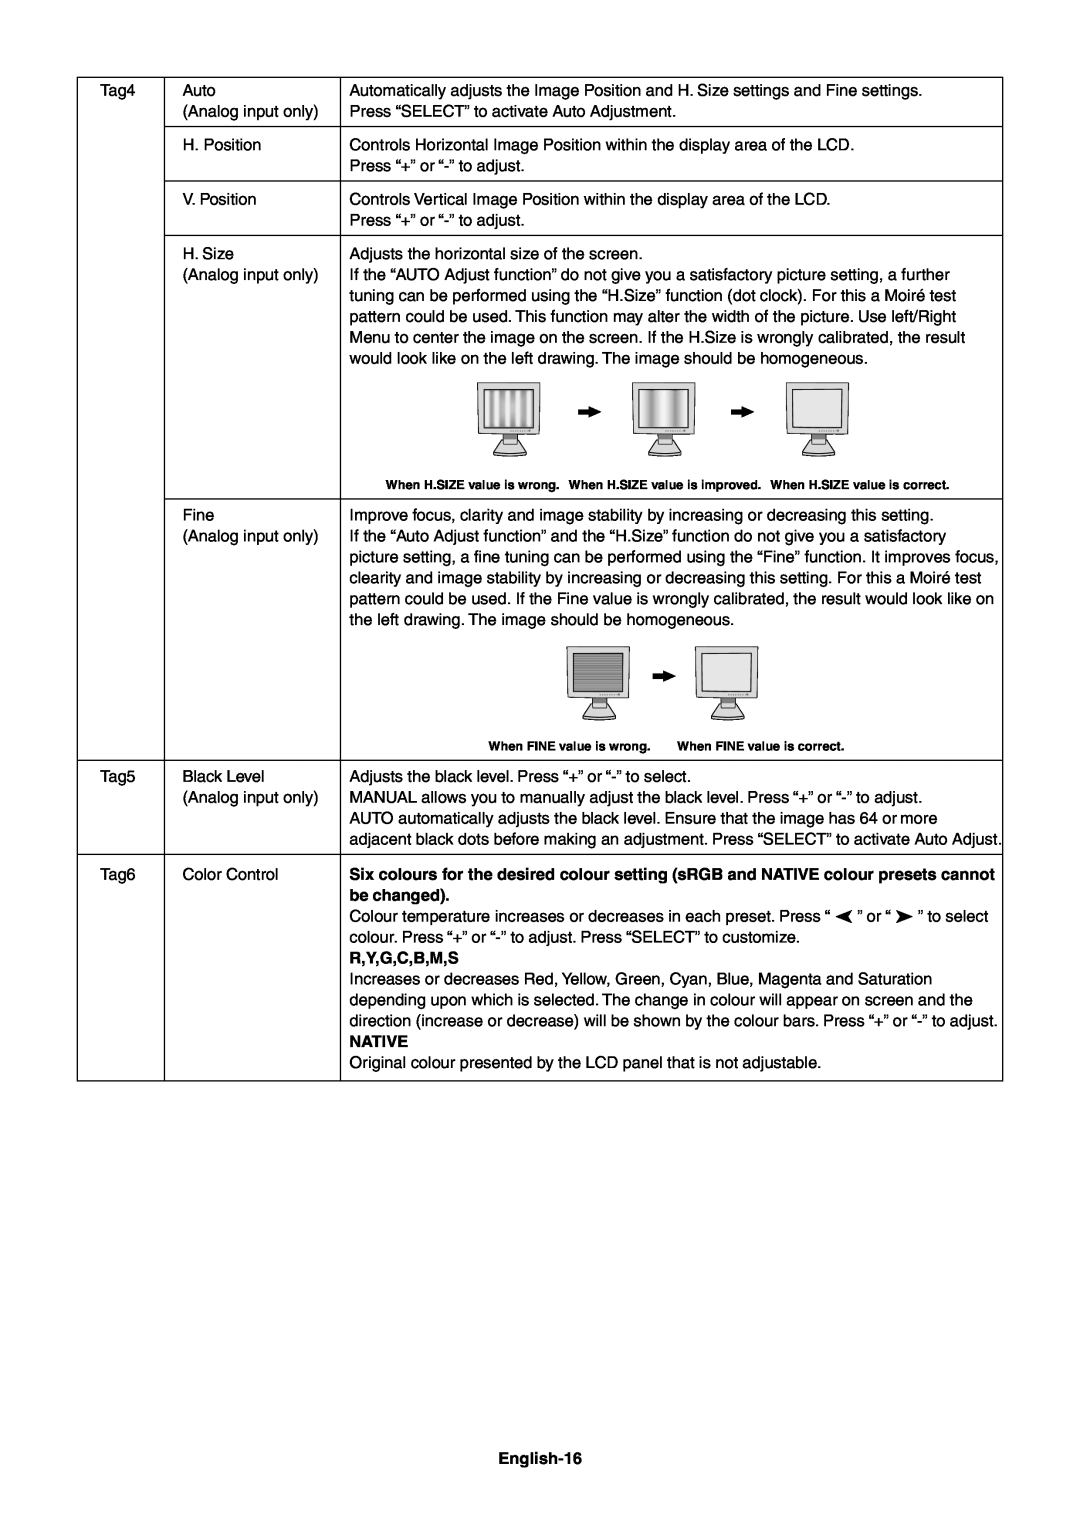 NEC LCD2080UX+ user manual be changed, R,Y,G,C,B,M,S, Native, English-16 